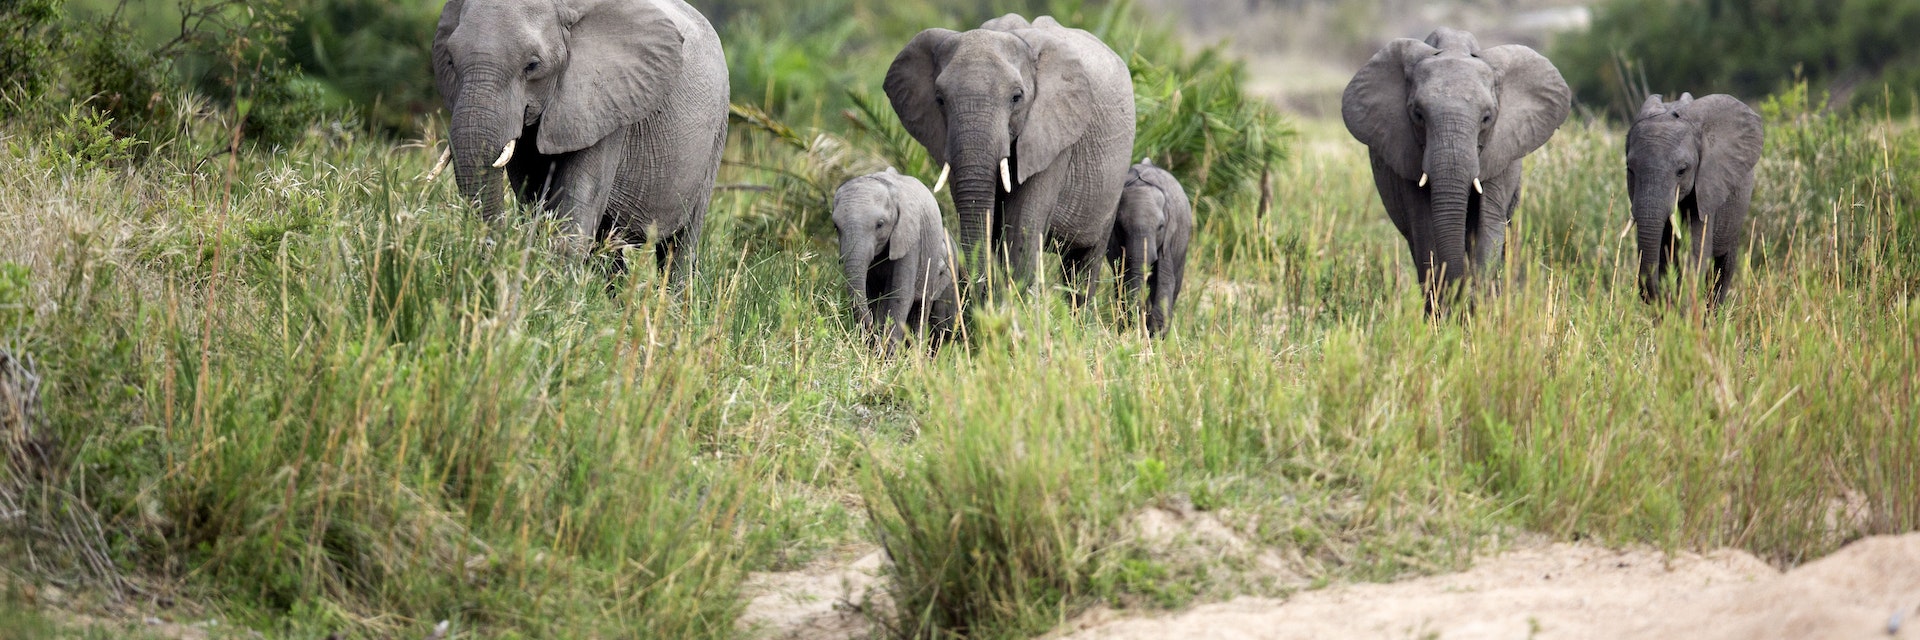 Herd of elephants walking through grassland.